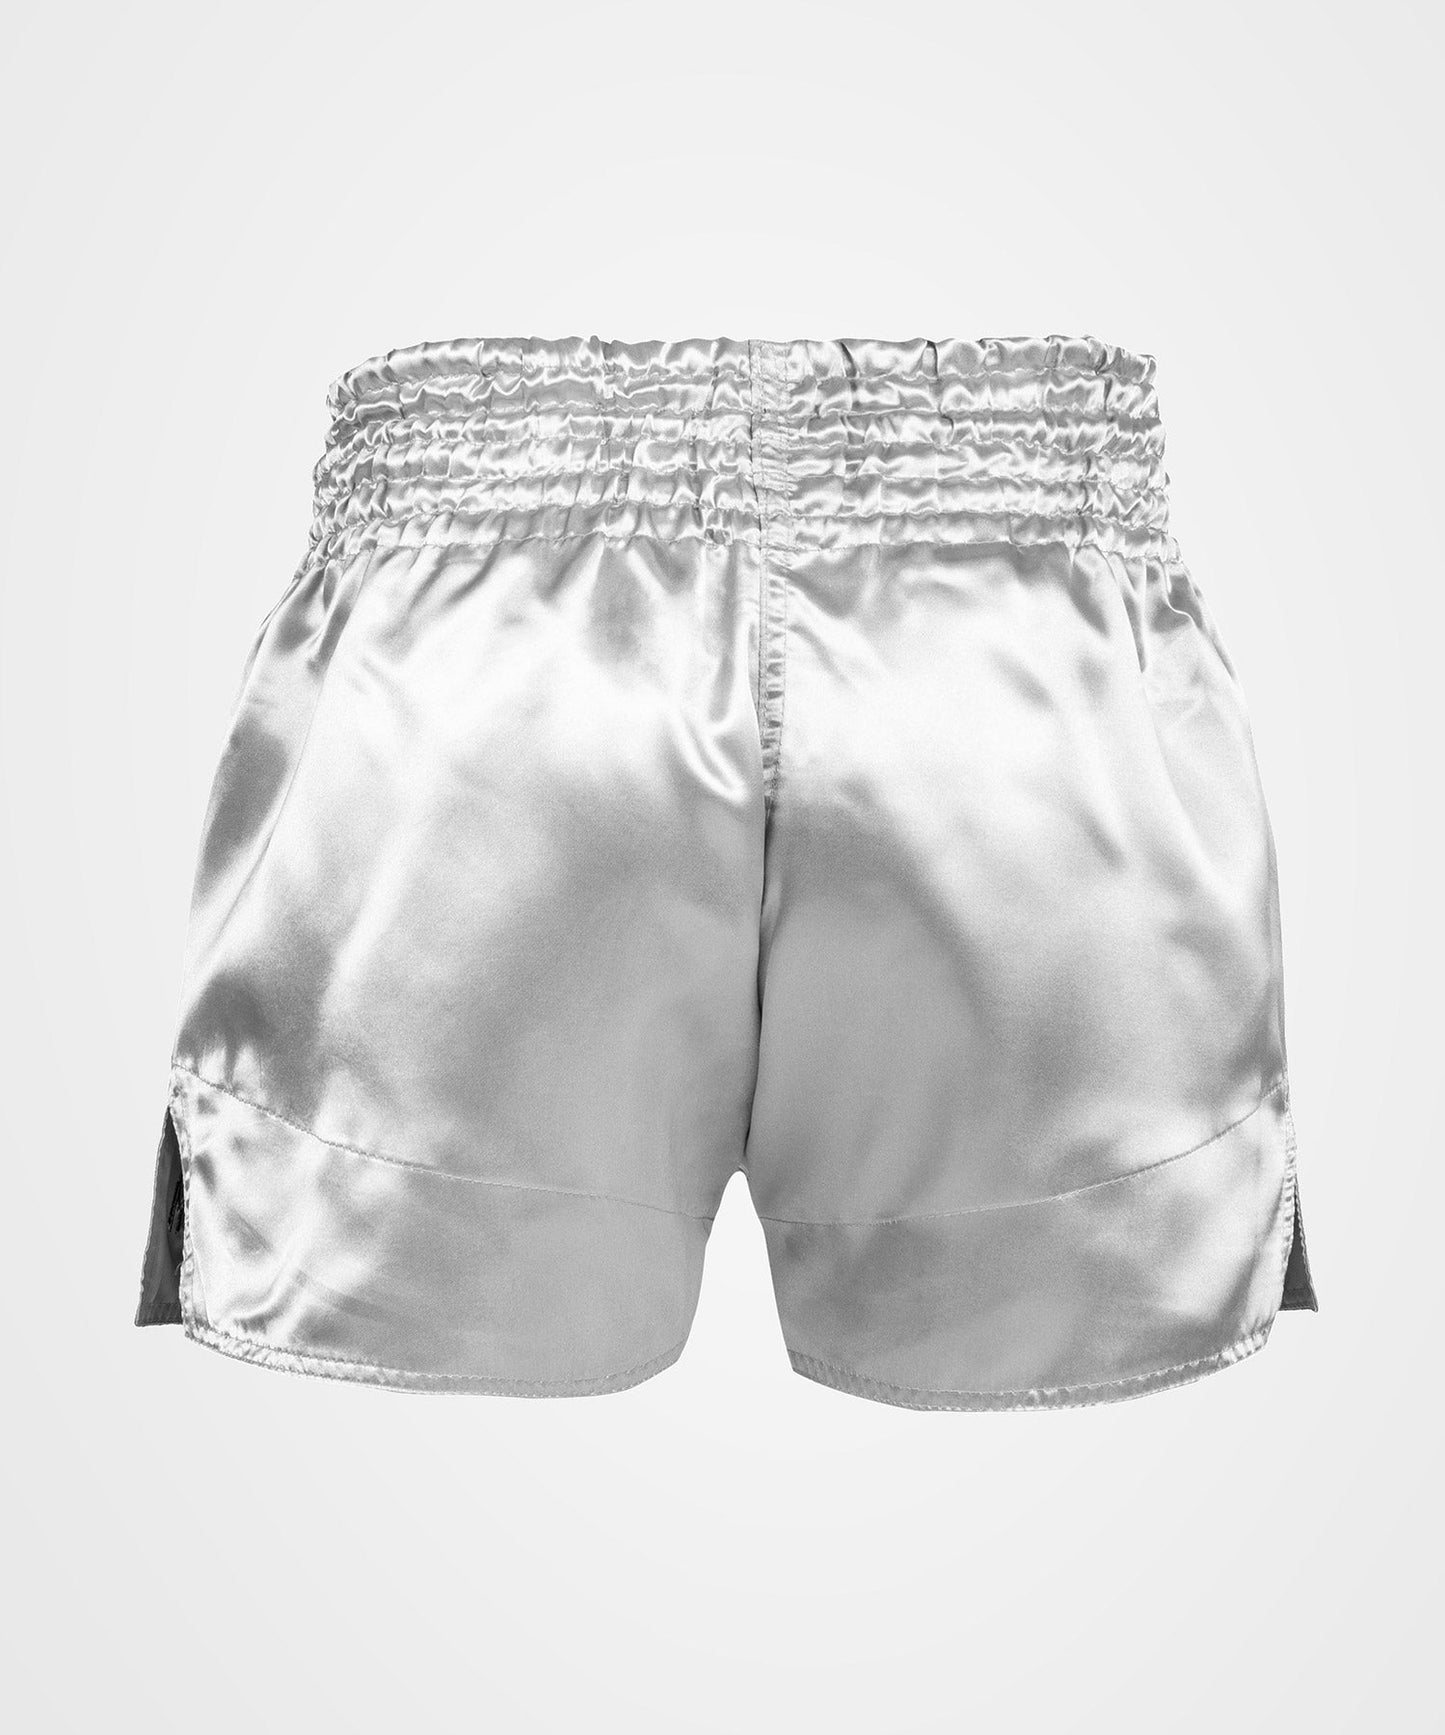 Venum Classic Muay Thai Shorts - Silver/Black